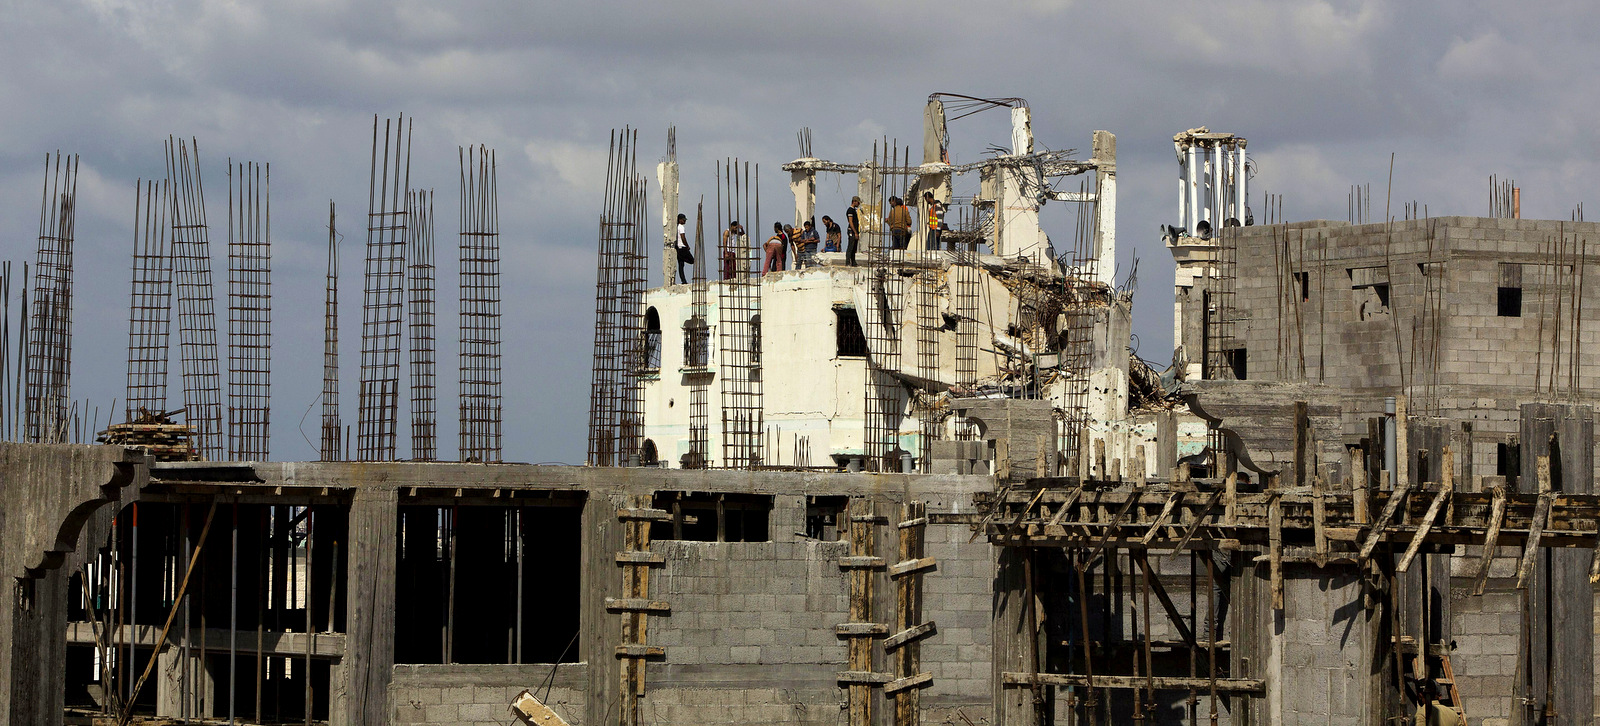 Palestinians work on rebuilding a home destroyed during last summer's Israeli assault on Gaza City. (AP Photo/Adel Hana)